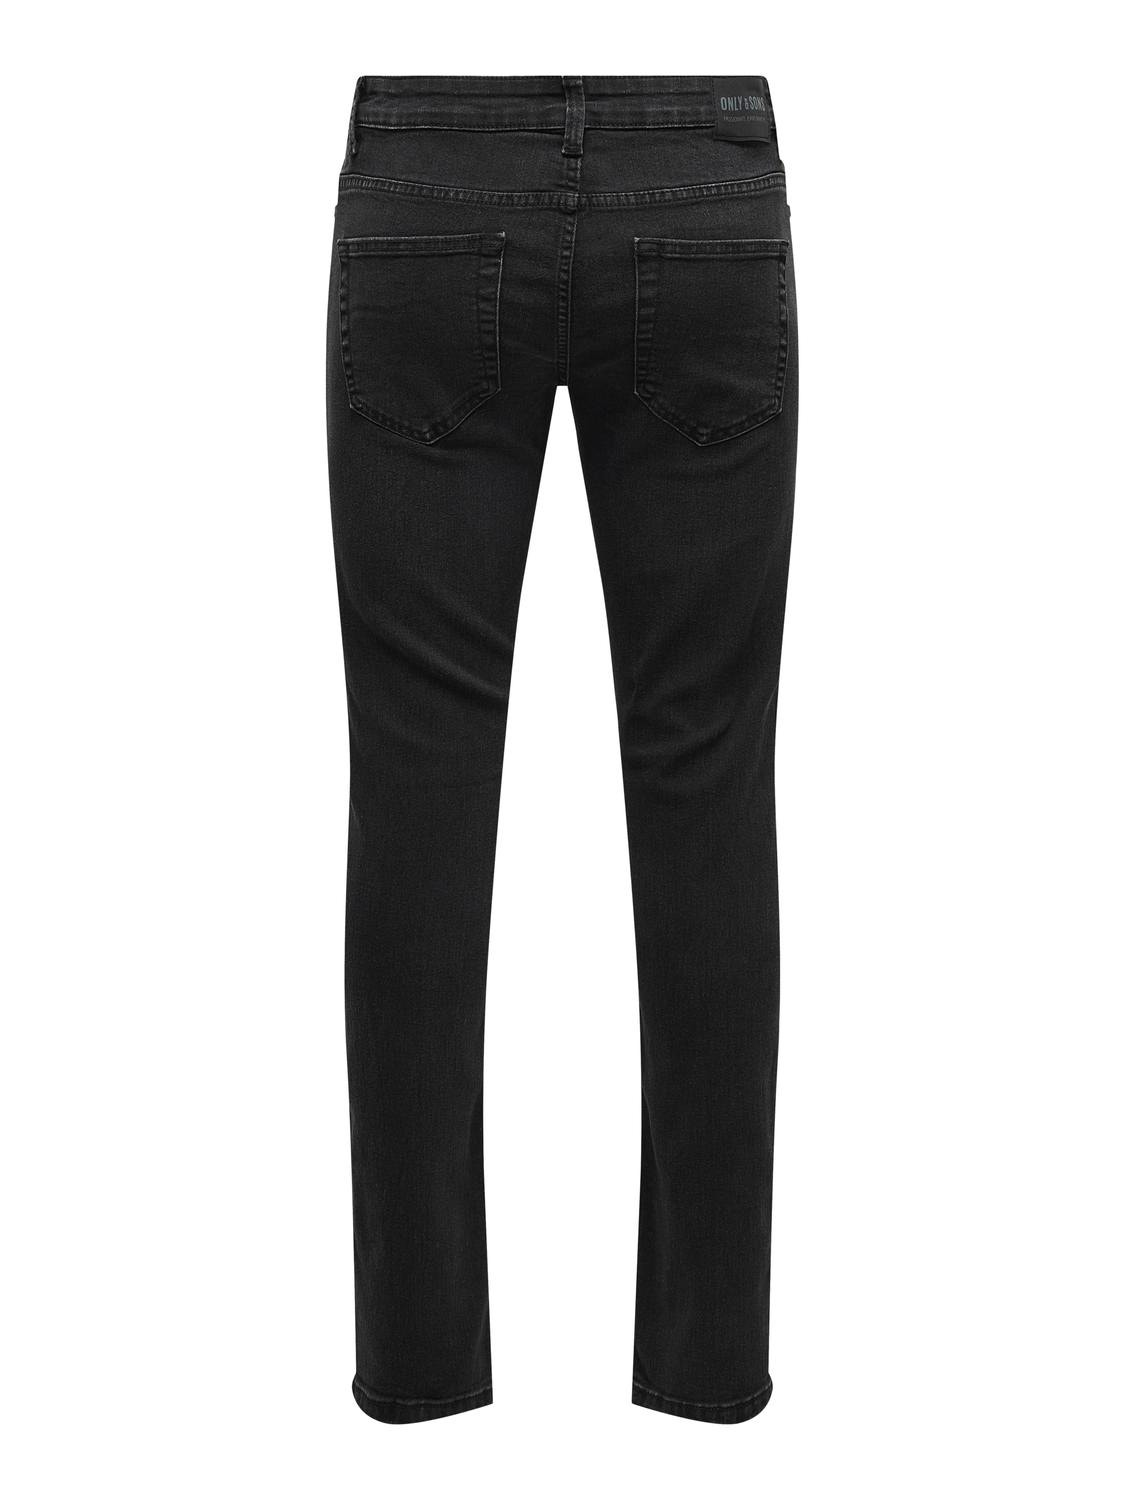 ONLY & SONS ONSLoom Slim Black Jeans -Black Denim - 22027841